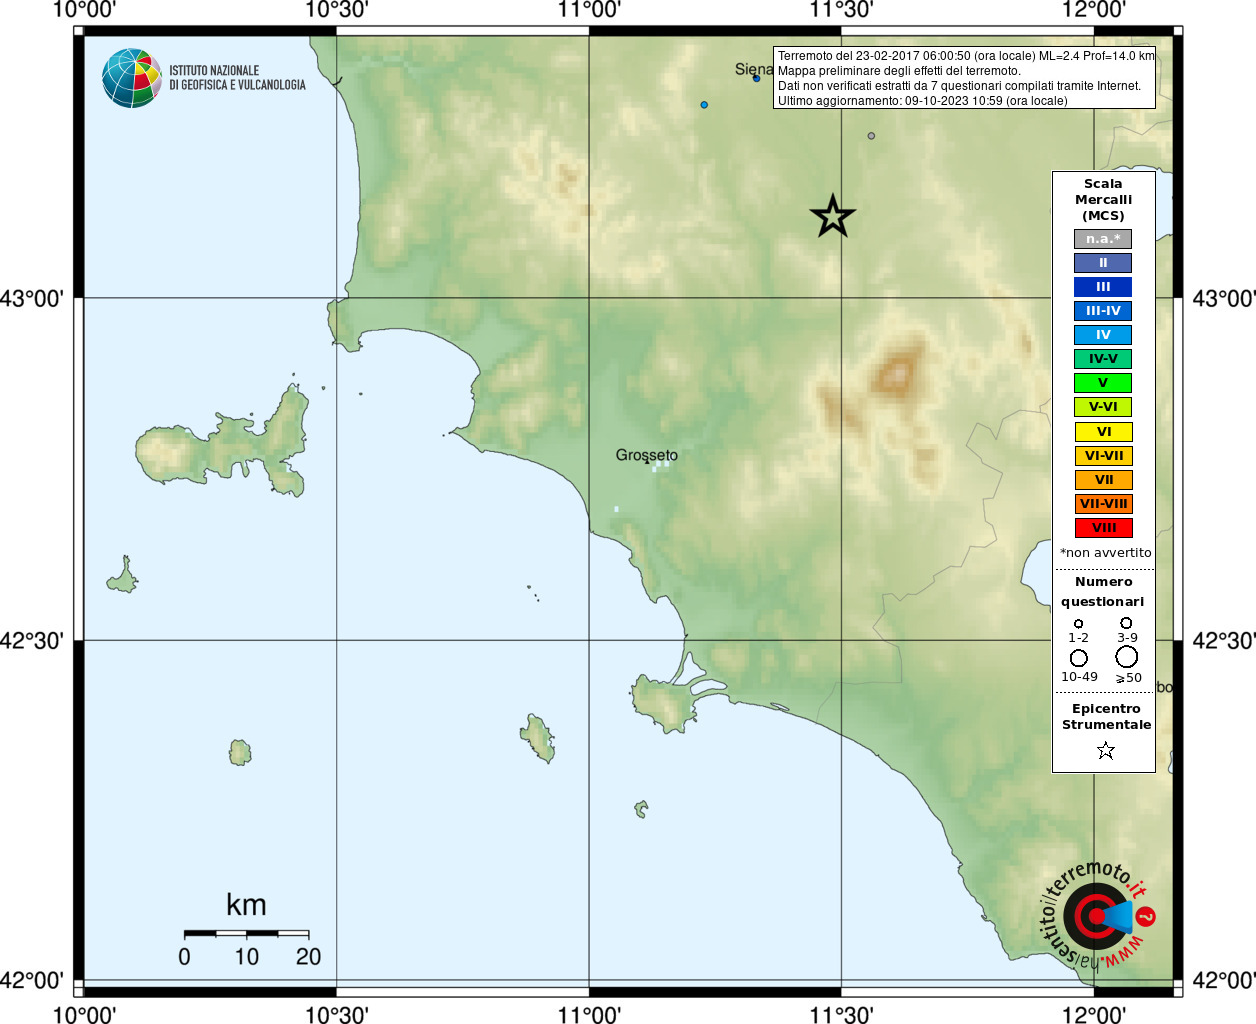 Earthquake 2 km S Buonconvento (SI), Magnitude ML 2.4, 23 February 2017 time 06:00:50 ...1252 x 1024